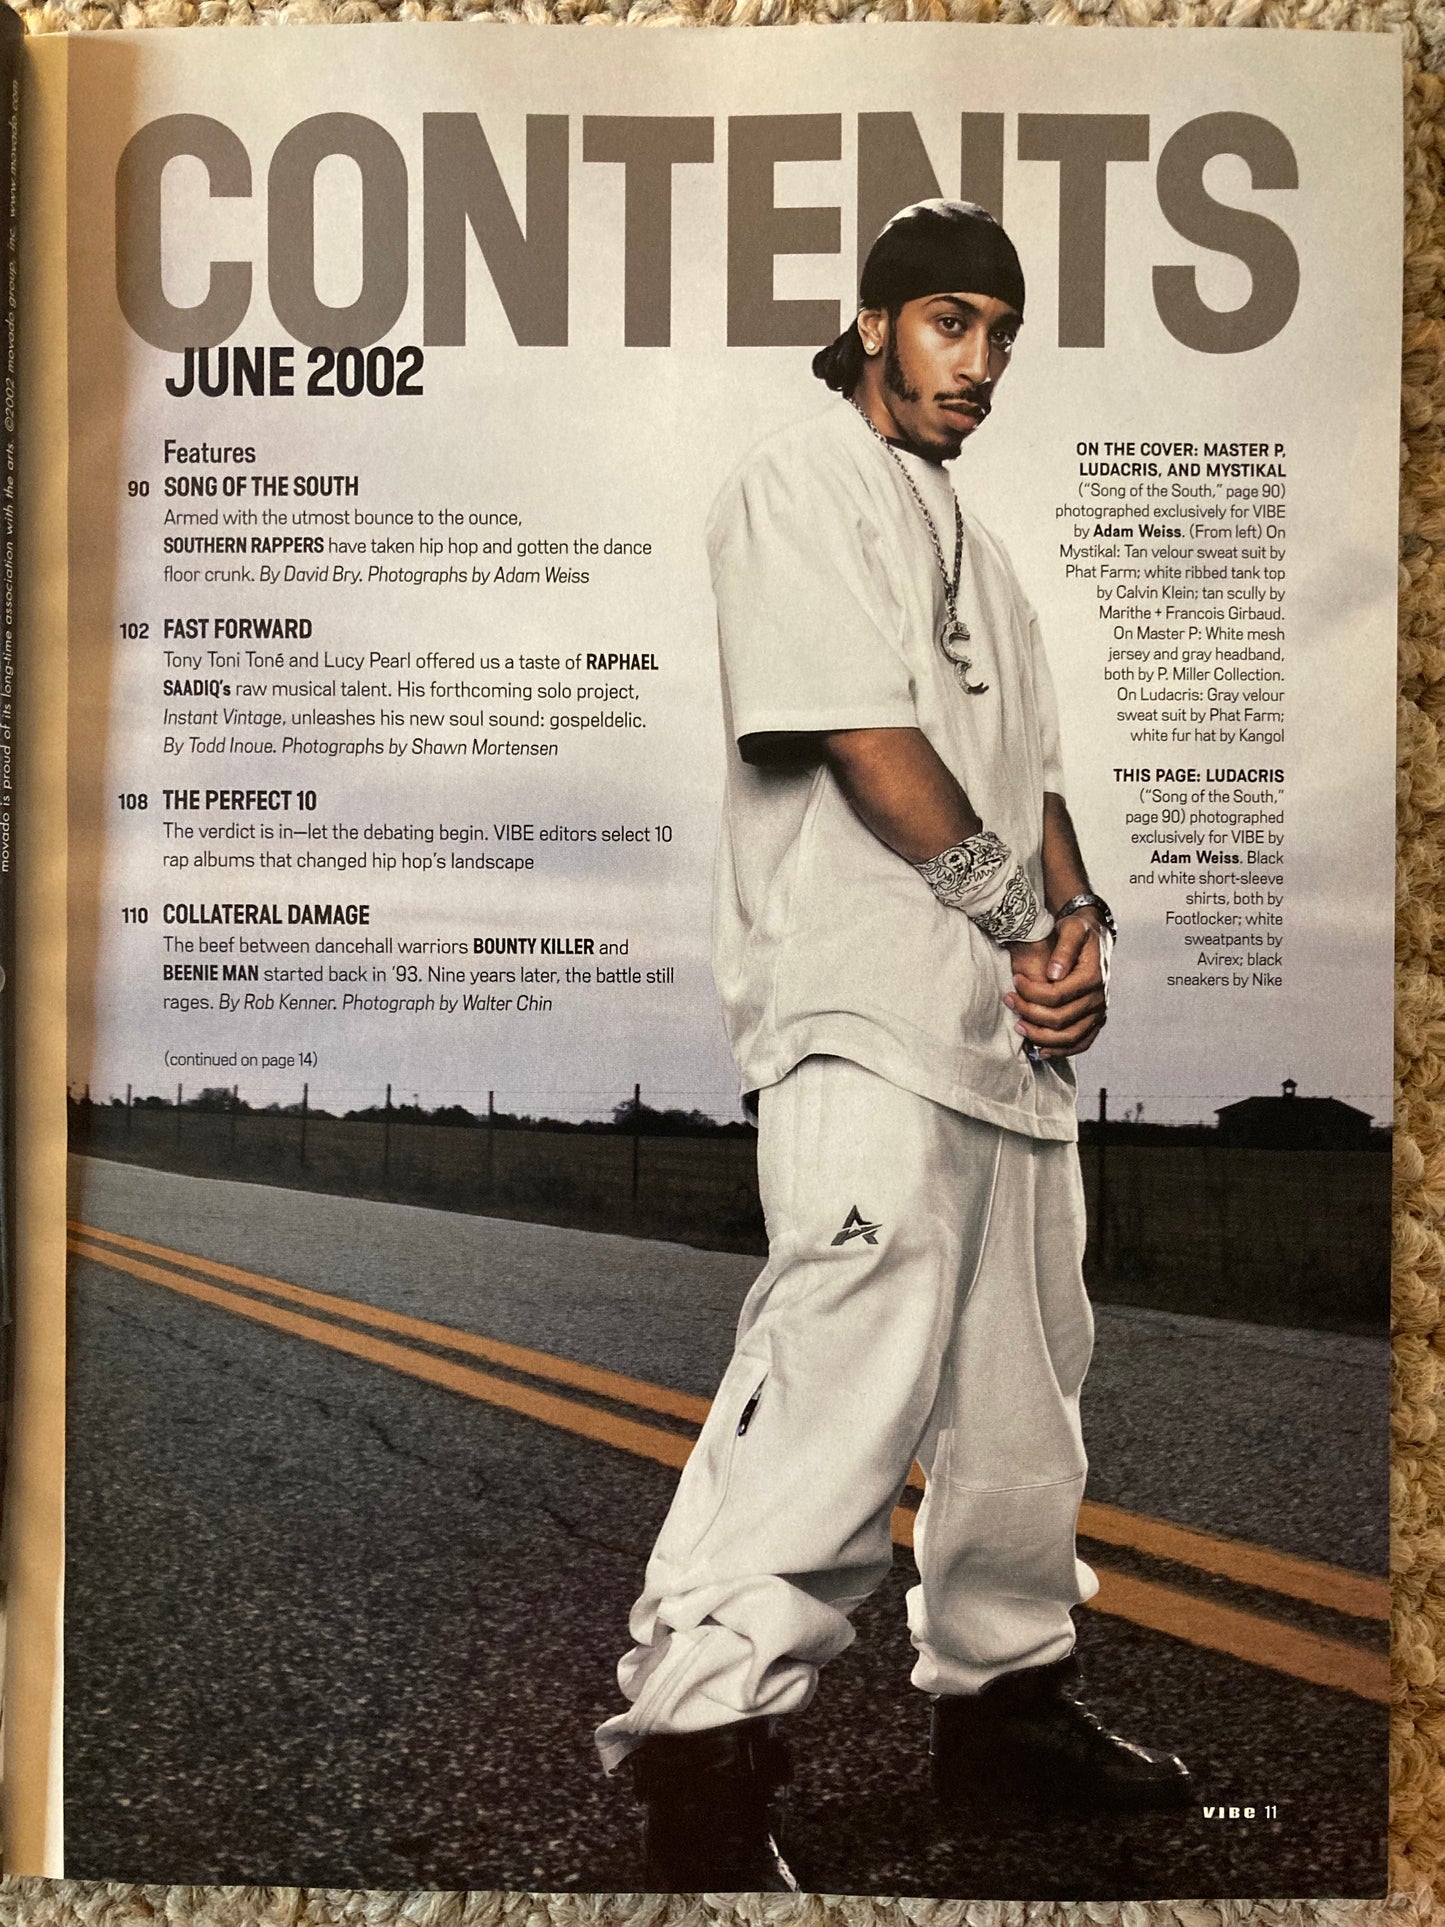 Vibe Magazine June 2002 Mystical/Master P/Ludacris - MoSneaks Shop Online